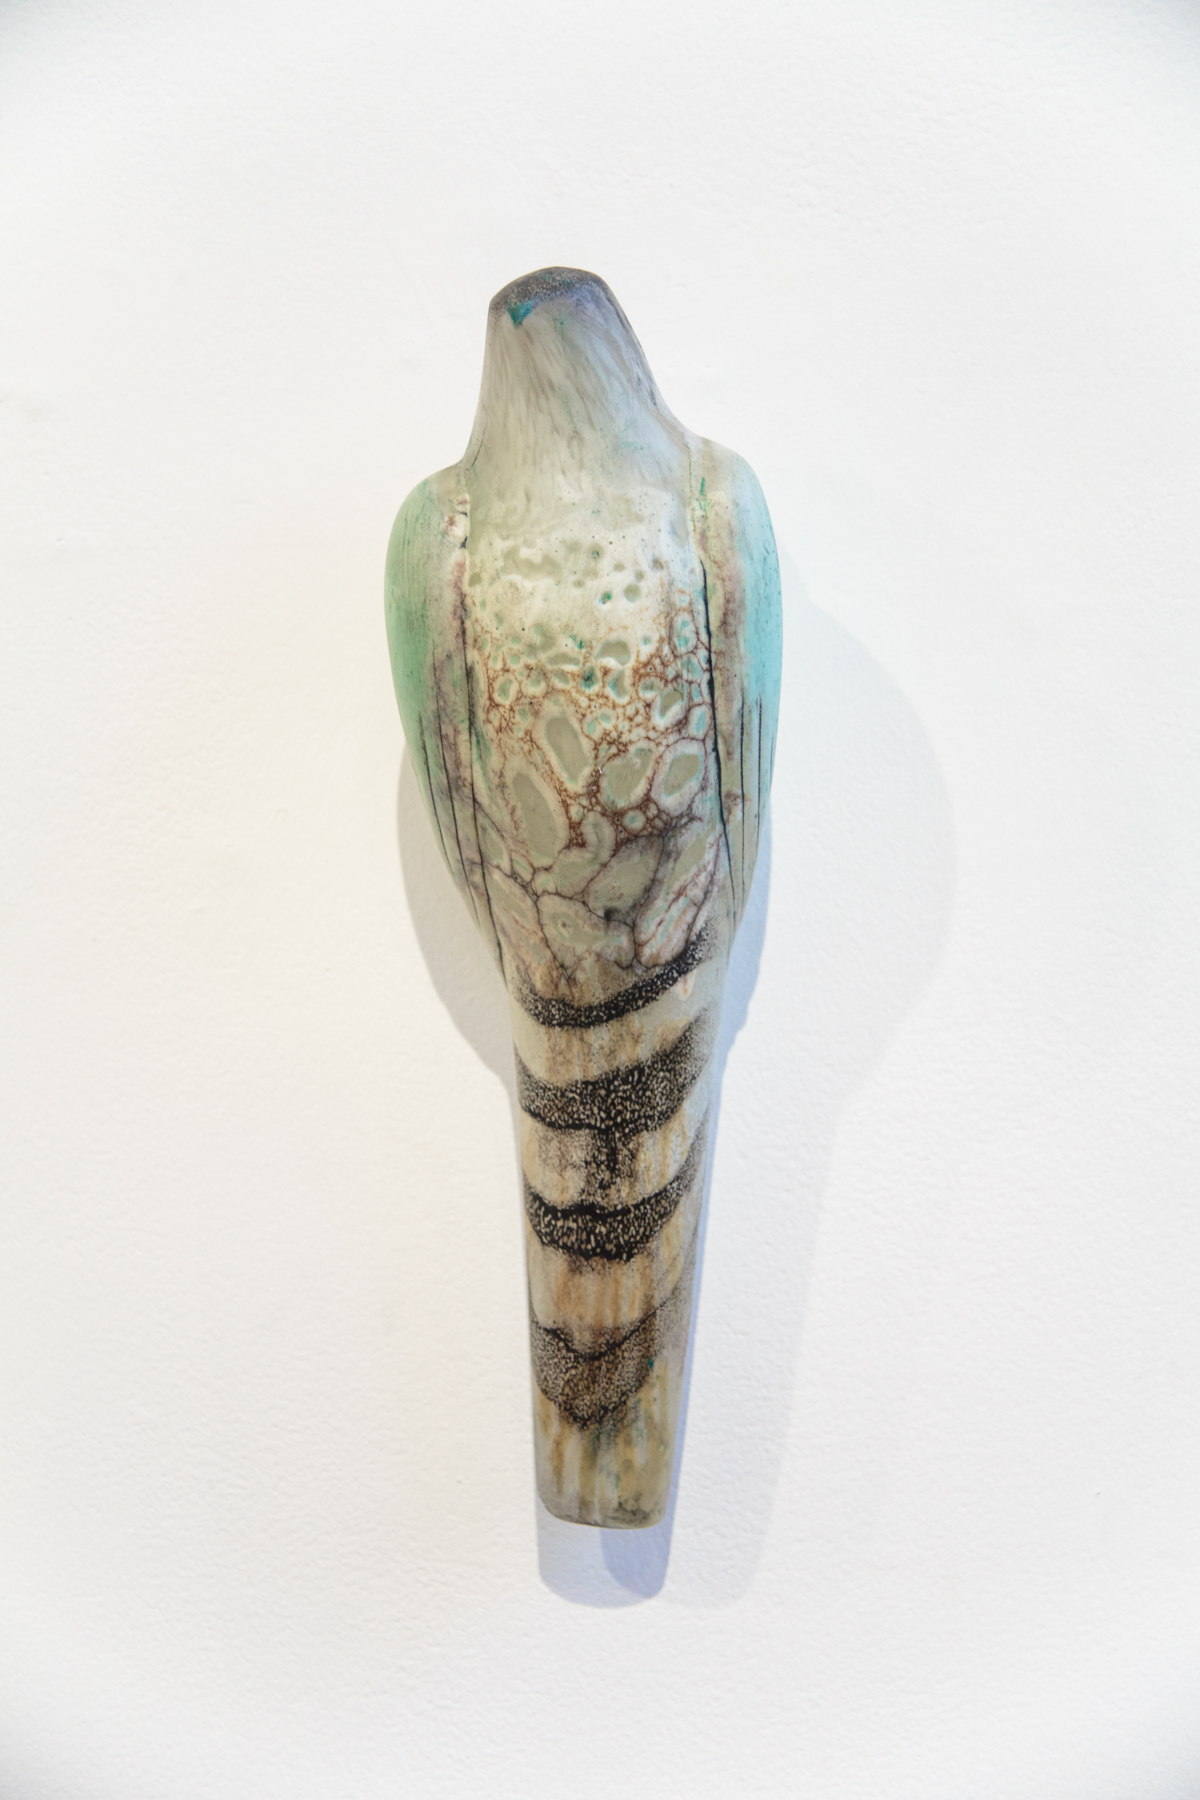  “Celadon Lace Bird,” 2019  Handblown pigmented glass 16 x 5 x 4 inches 